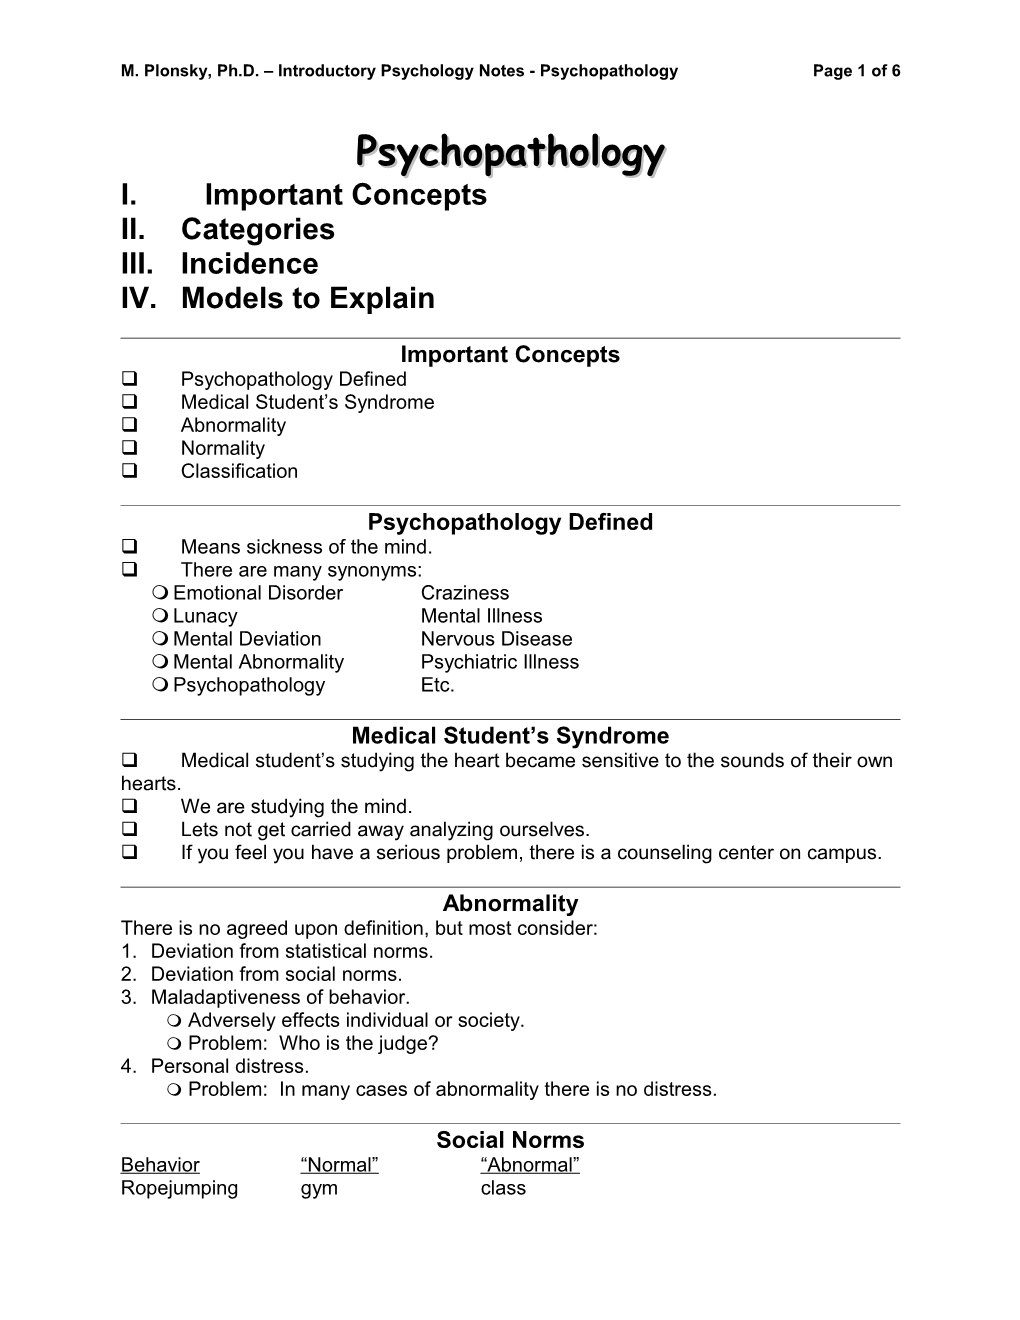 M. Plonsky, Ph.D. Introductory Psychology Notes - Psychopathologypage 1 of 6